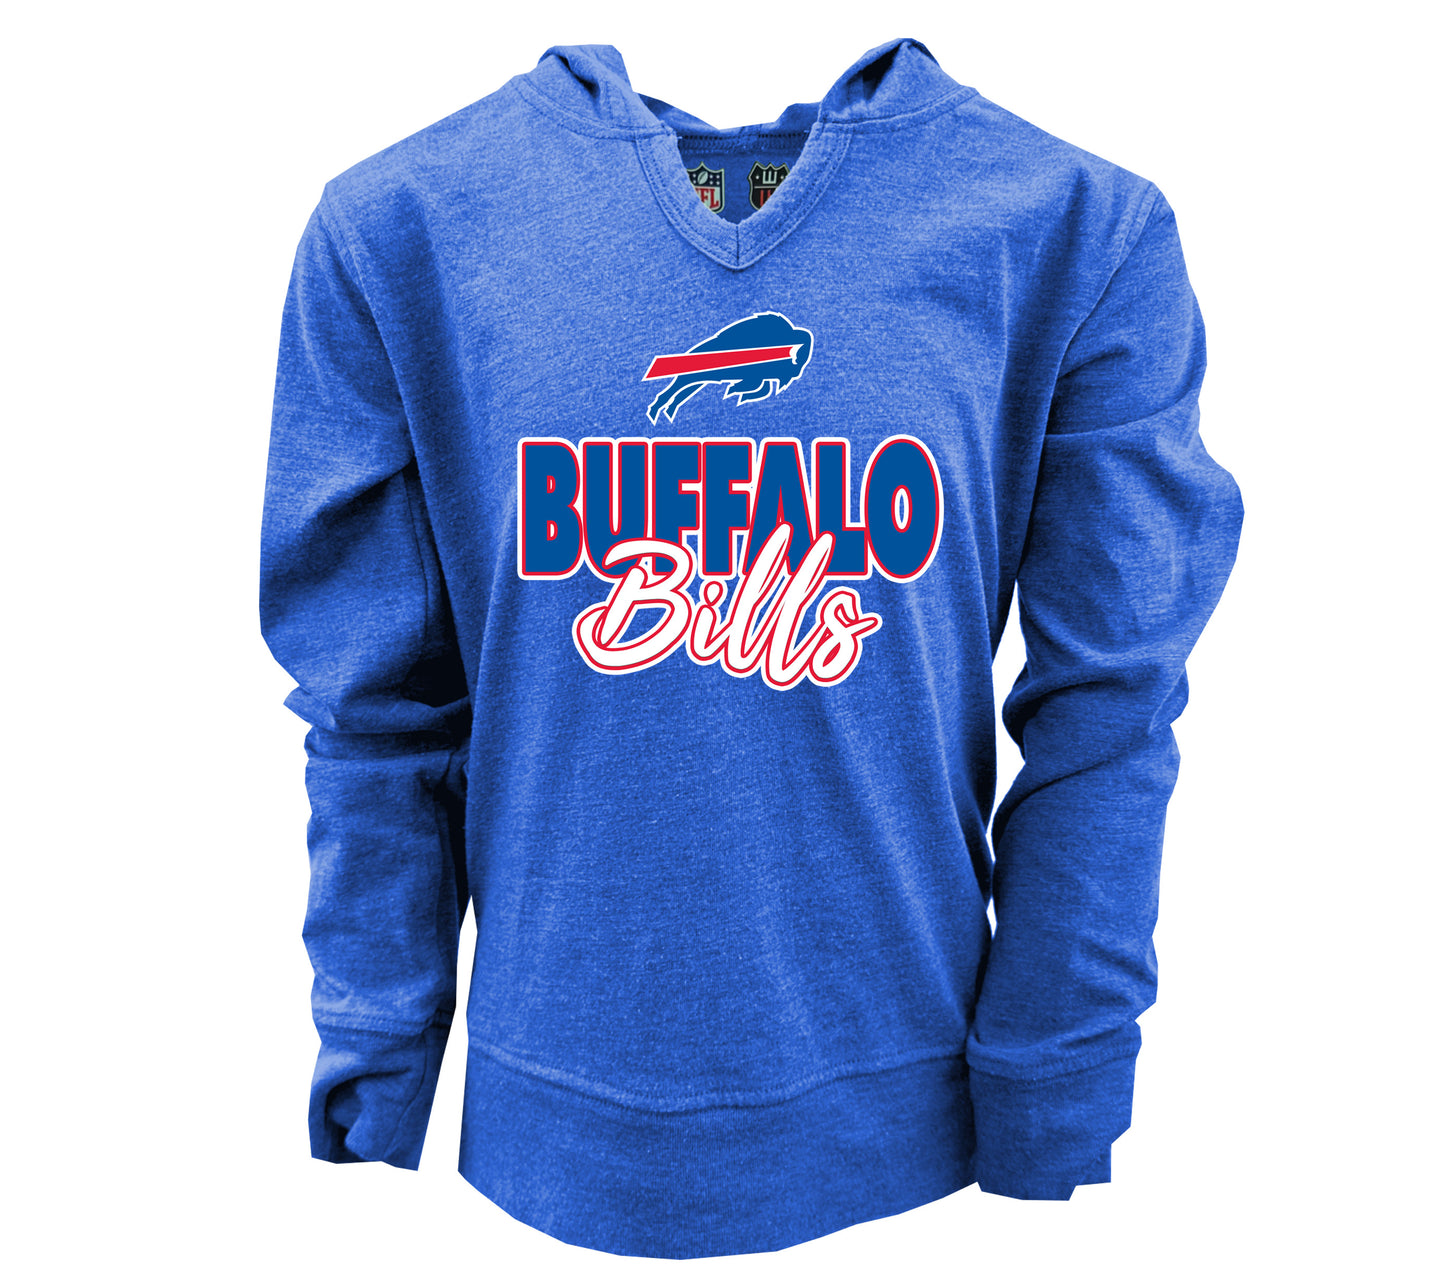 Buffalo Bills  NFL Girl's Youth Burnout V-neck Hoodie